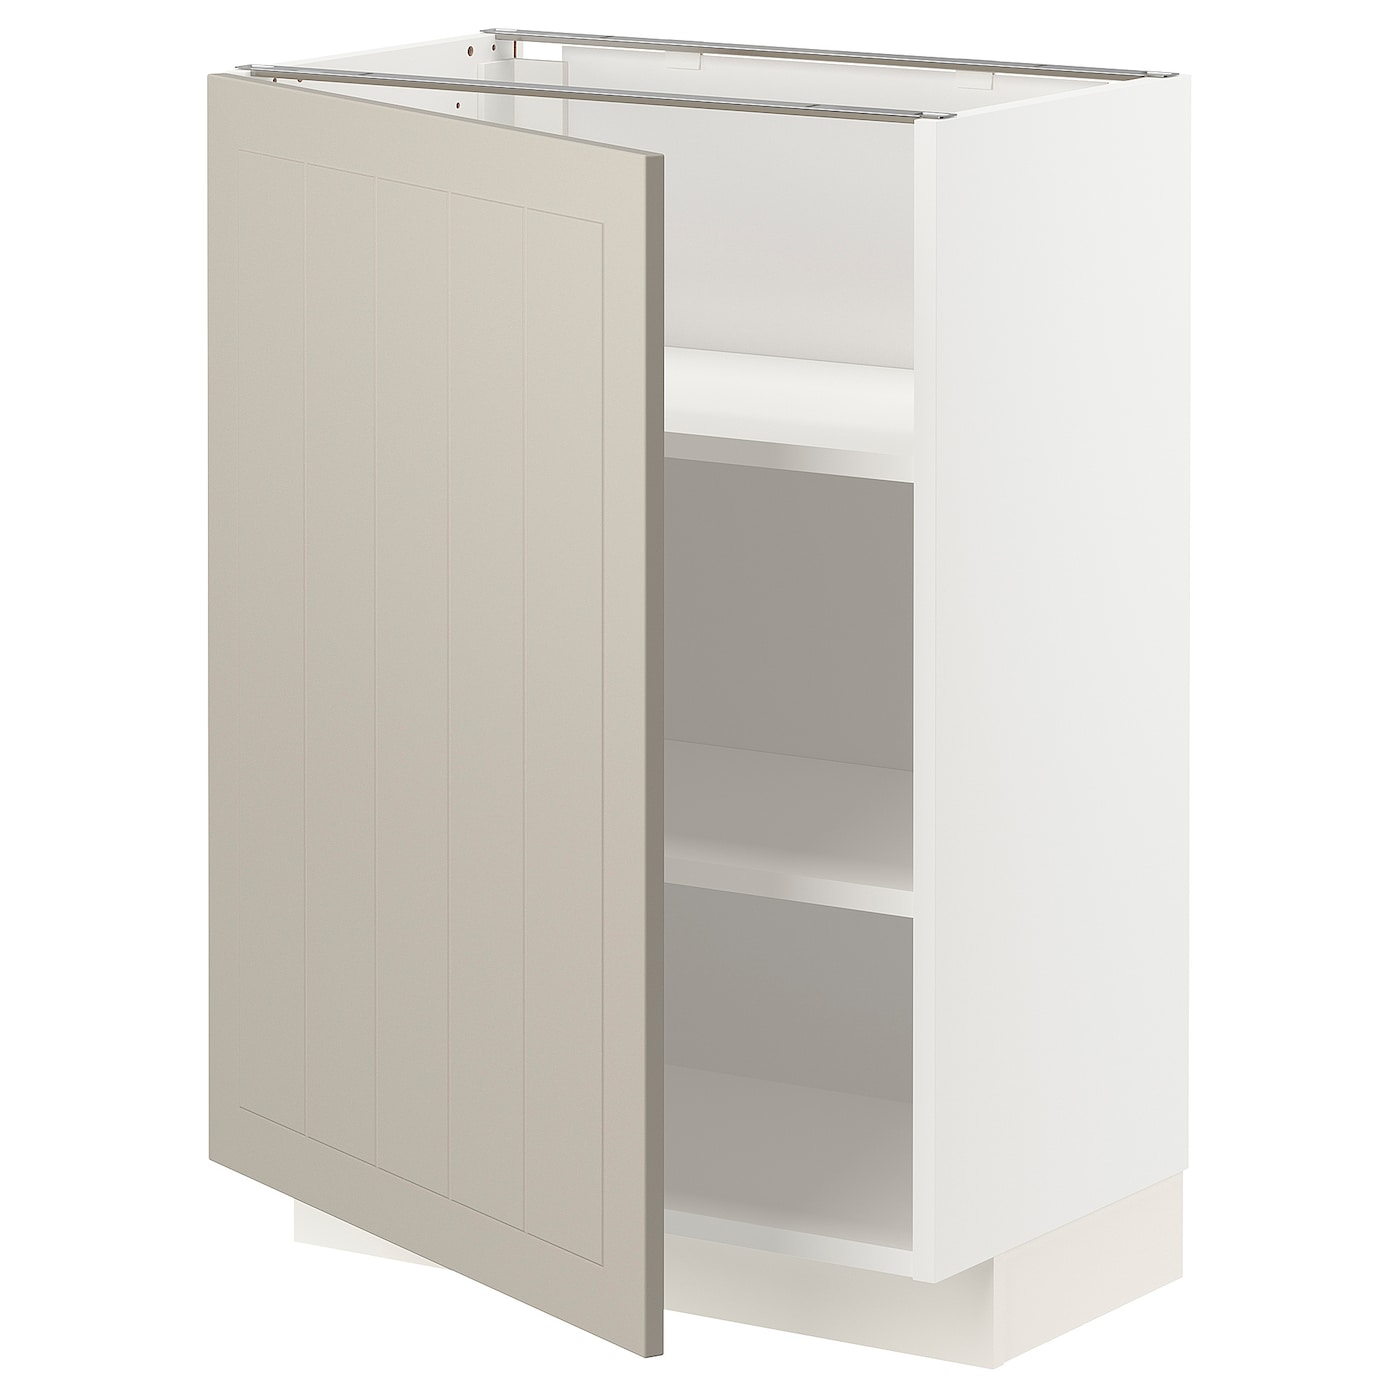 Напольный шкаф - METOD IKEA/ МЕТОД ИКЕА,  88х60 см, белый/бежевый